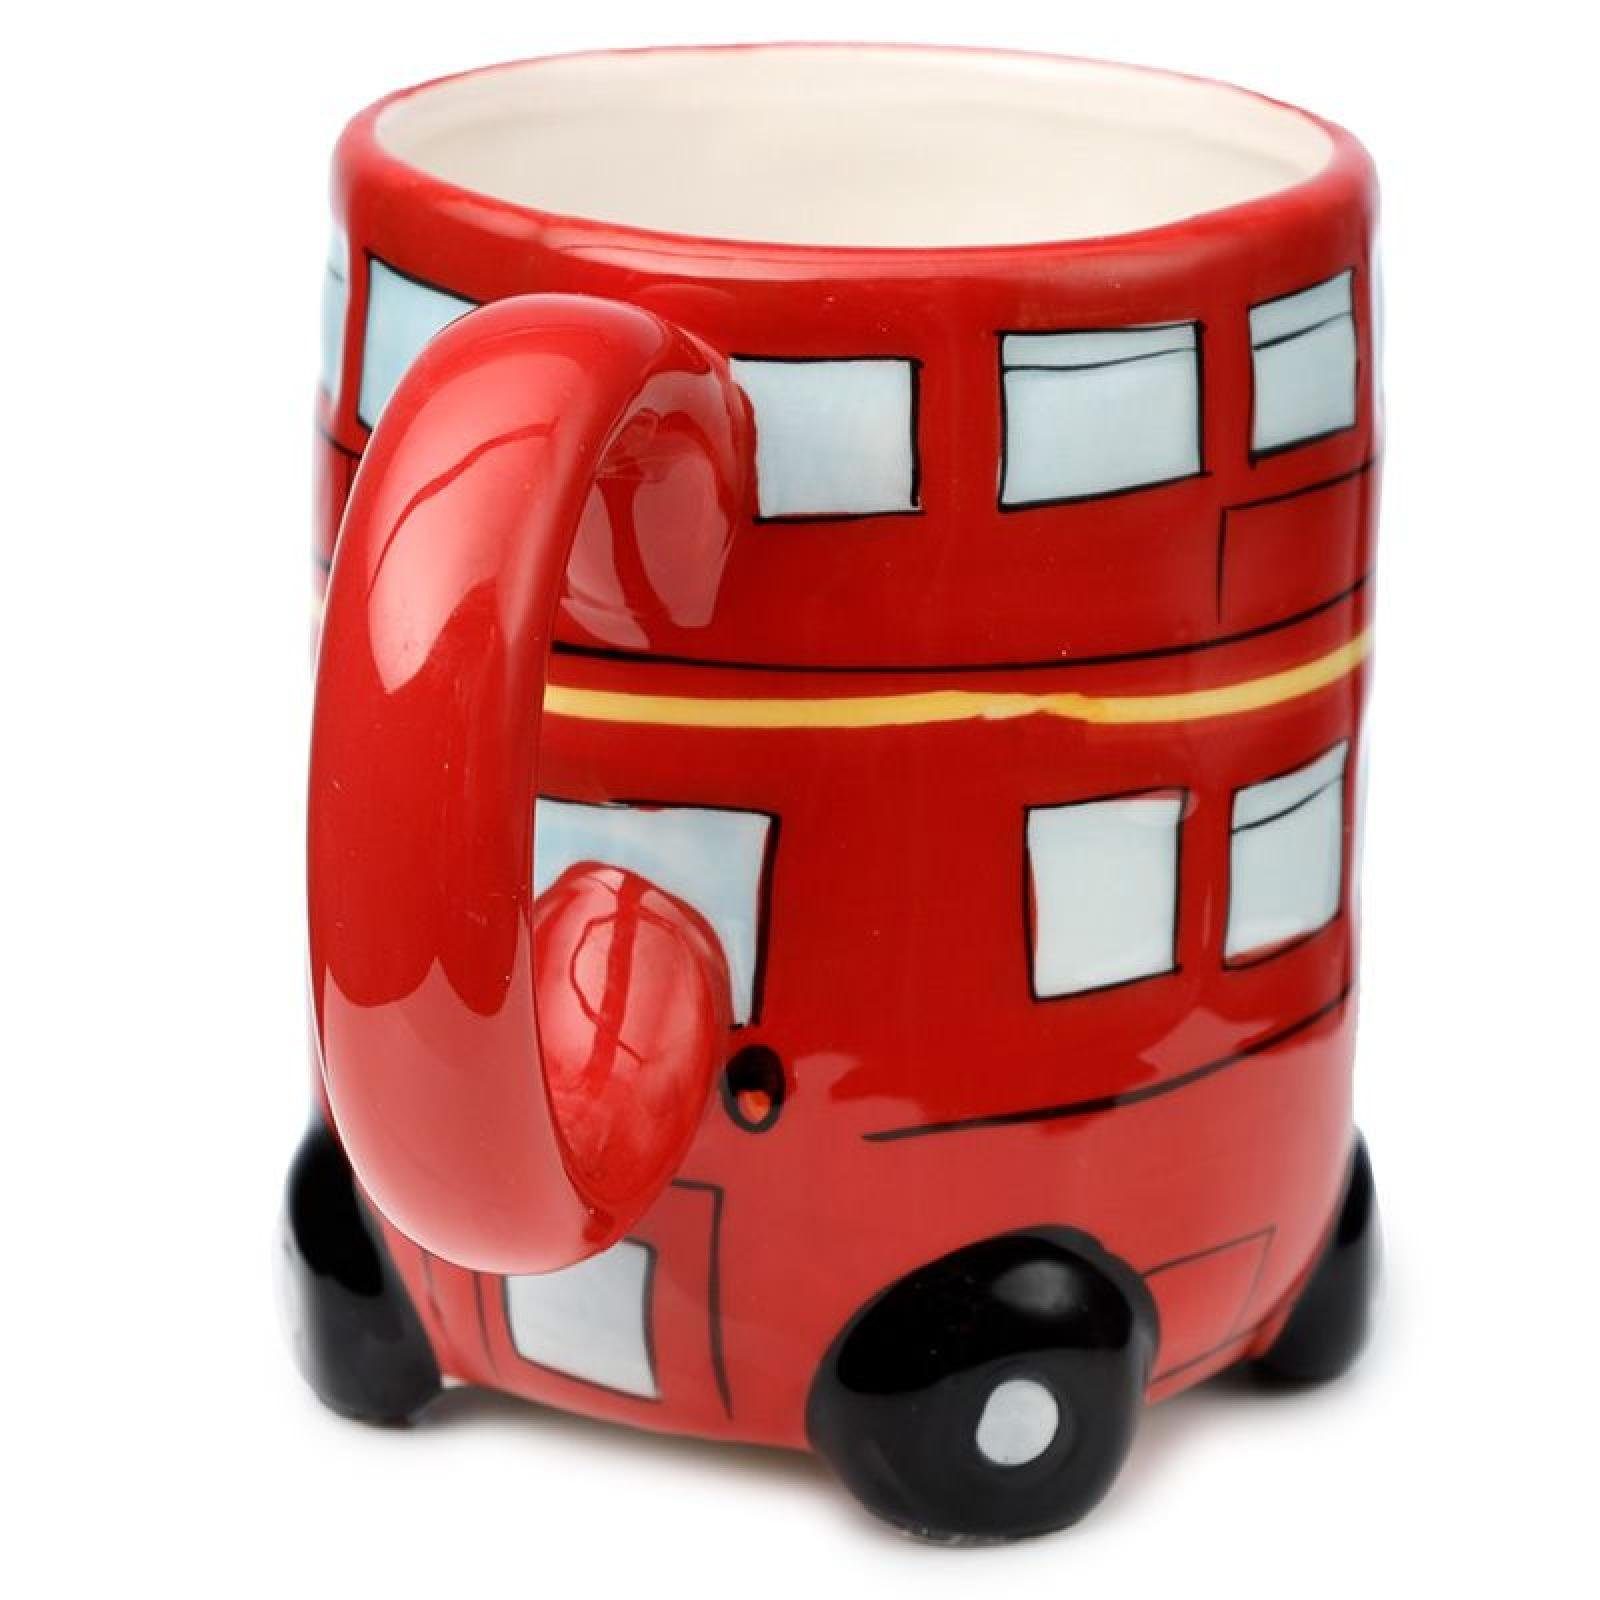 Design geformte Neues Puckator Tasse Tasse Doppelstockbus aus Dolomit-Keramik